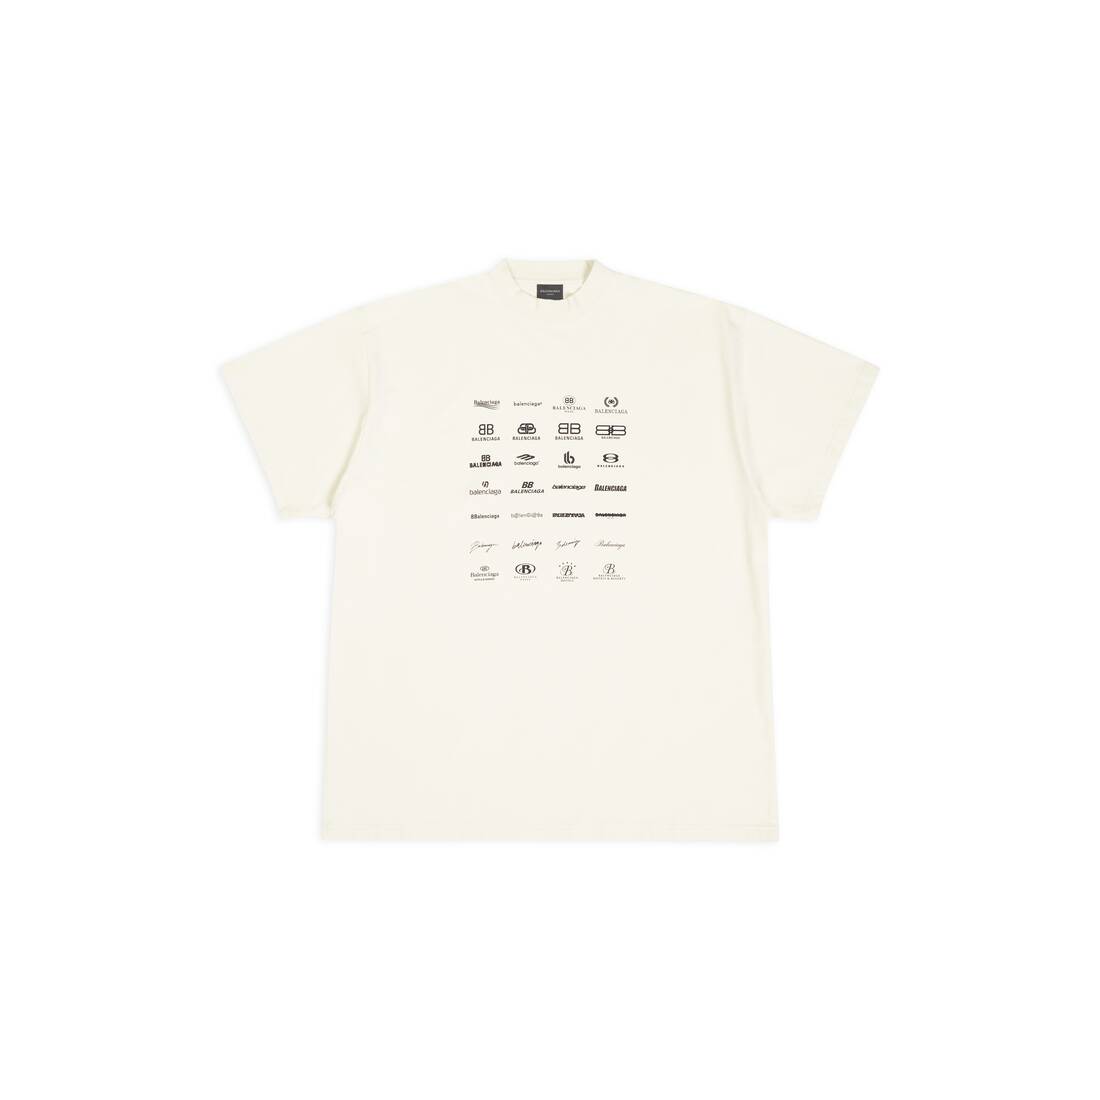 Men’s Balenciaga T Shirt White/Beige color Size Small